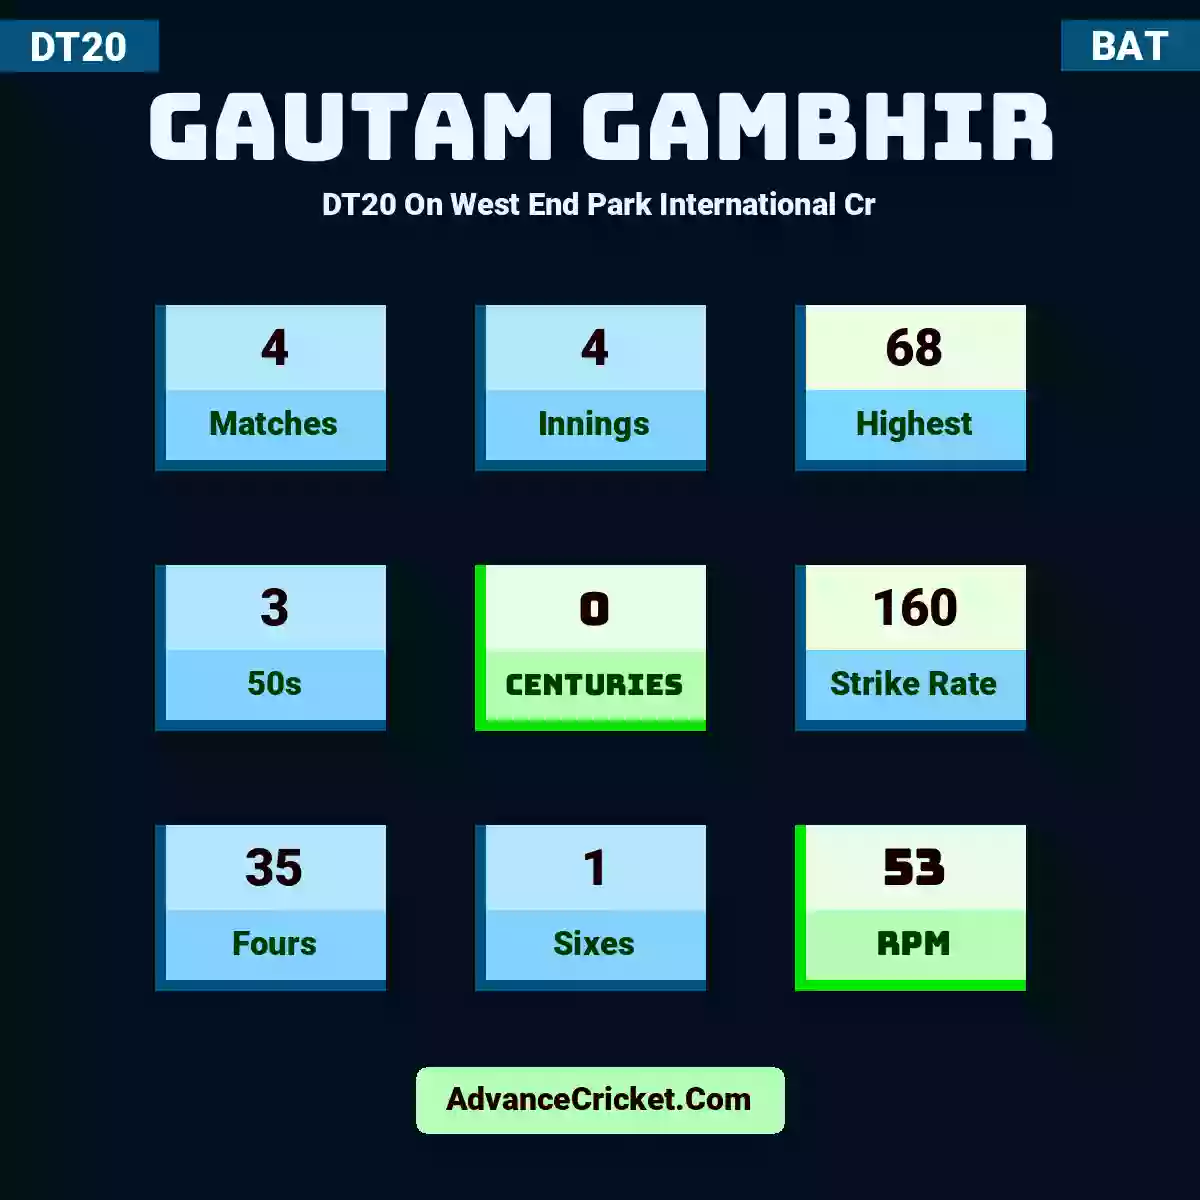 Gautam Gambhir DT20  On West End Park International Cr, Gautam Gambhir played 4 matches, scored 68 runs as highest, 3 half-centuries, and 0 centuries, with a strike rate of 160. G.Gambhir hit 35 fours and 1 sixes, with an RPM of 53.